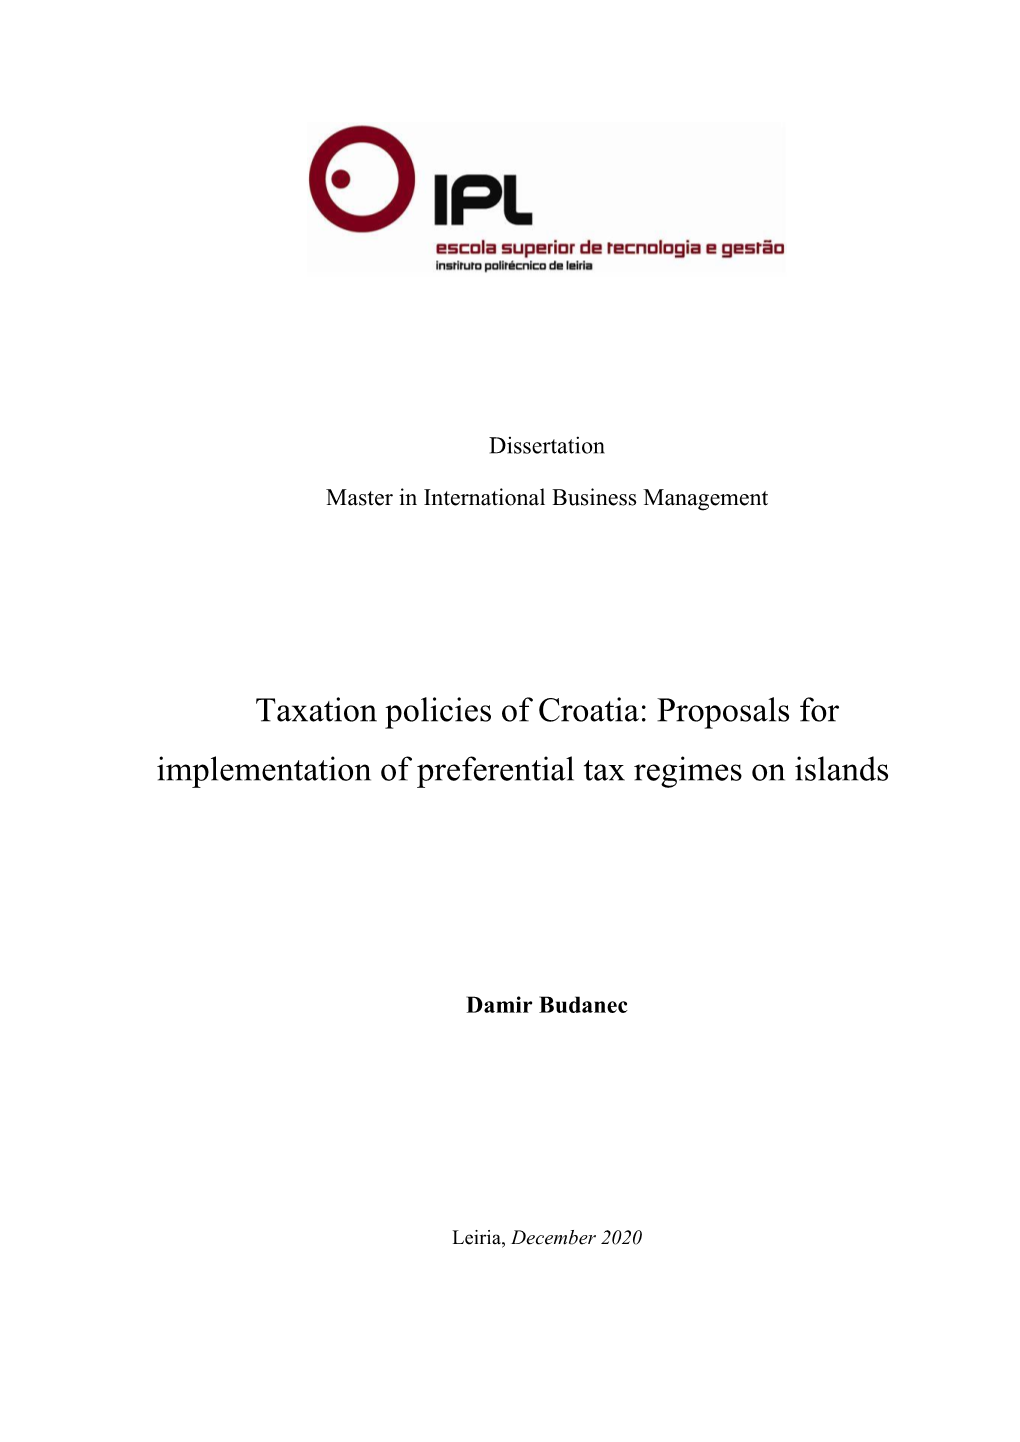 Proposals for Implementation of Preferential Tax Regimes on Islands